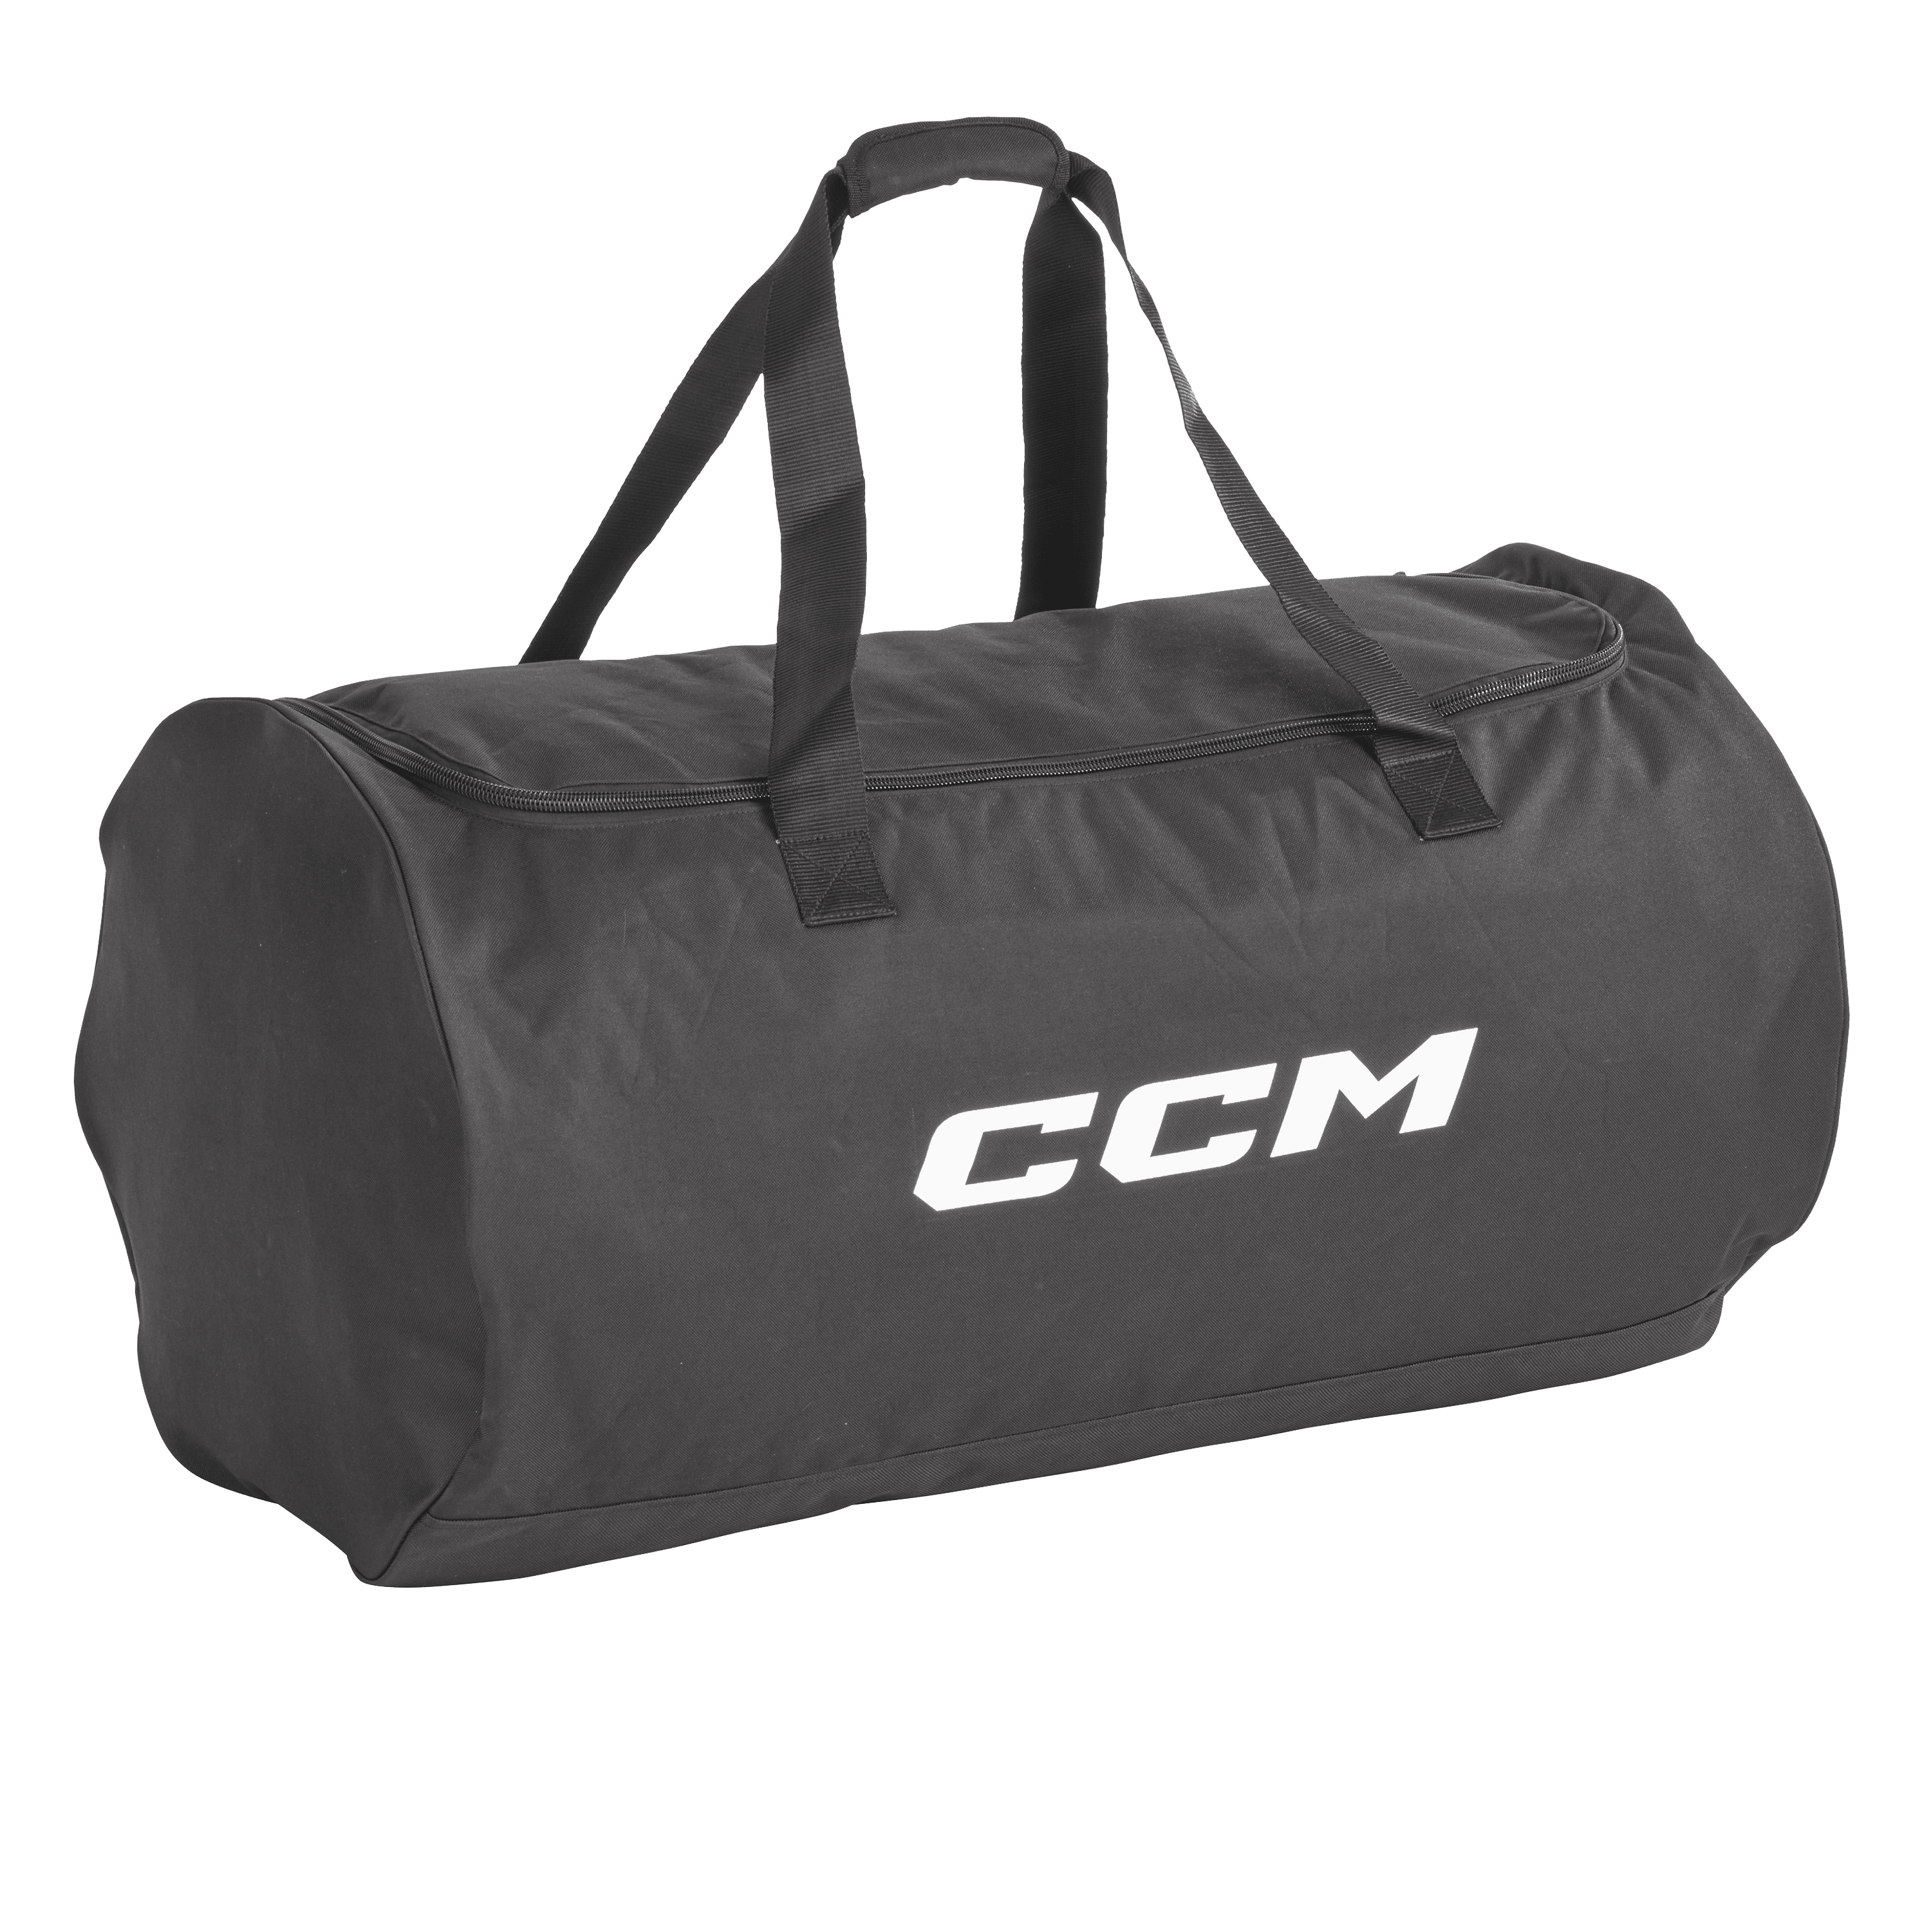 Tasche CCM 410 Player Basic Carry Bag YT 24"L x 16"H x 16" W